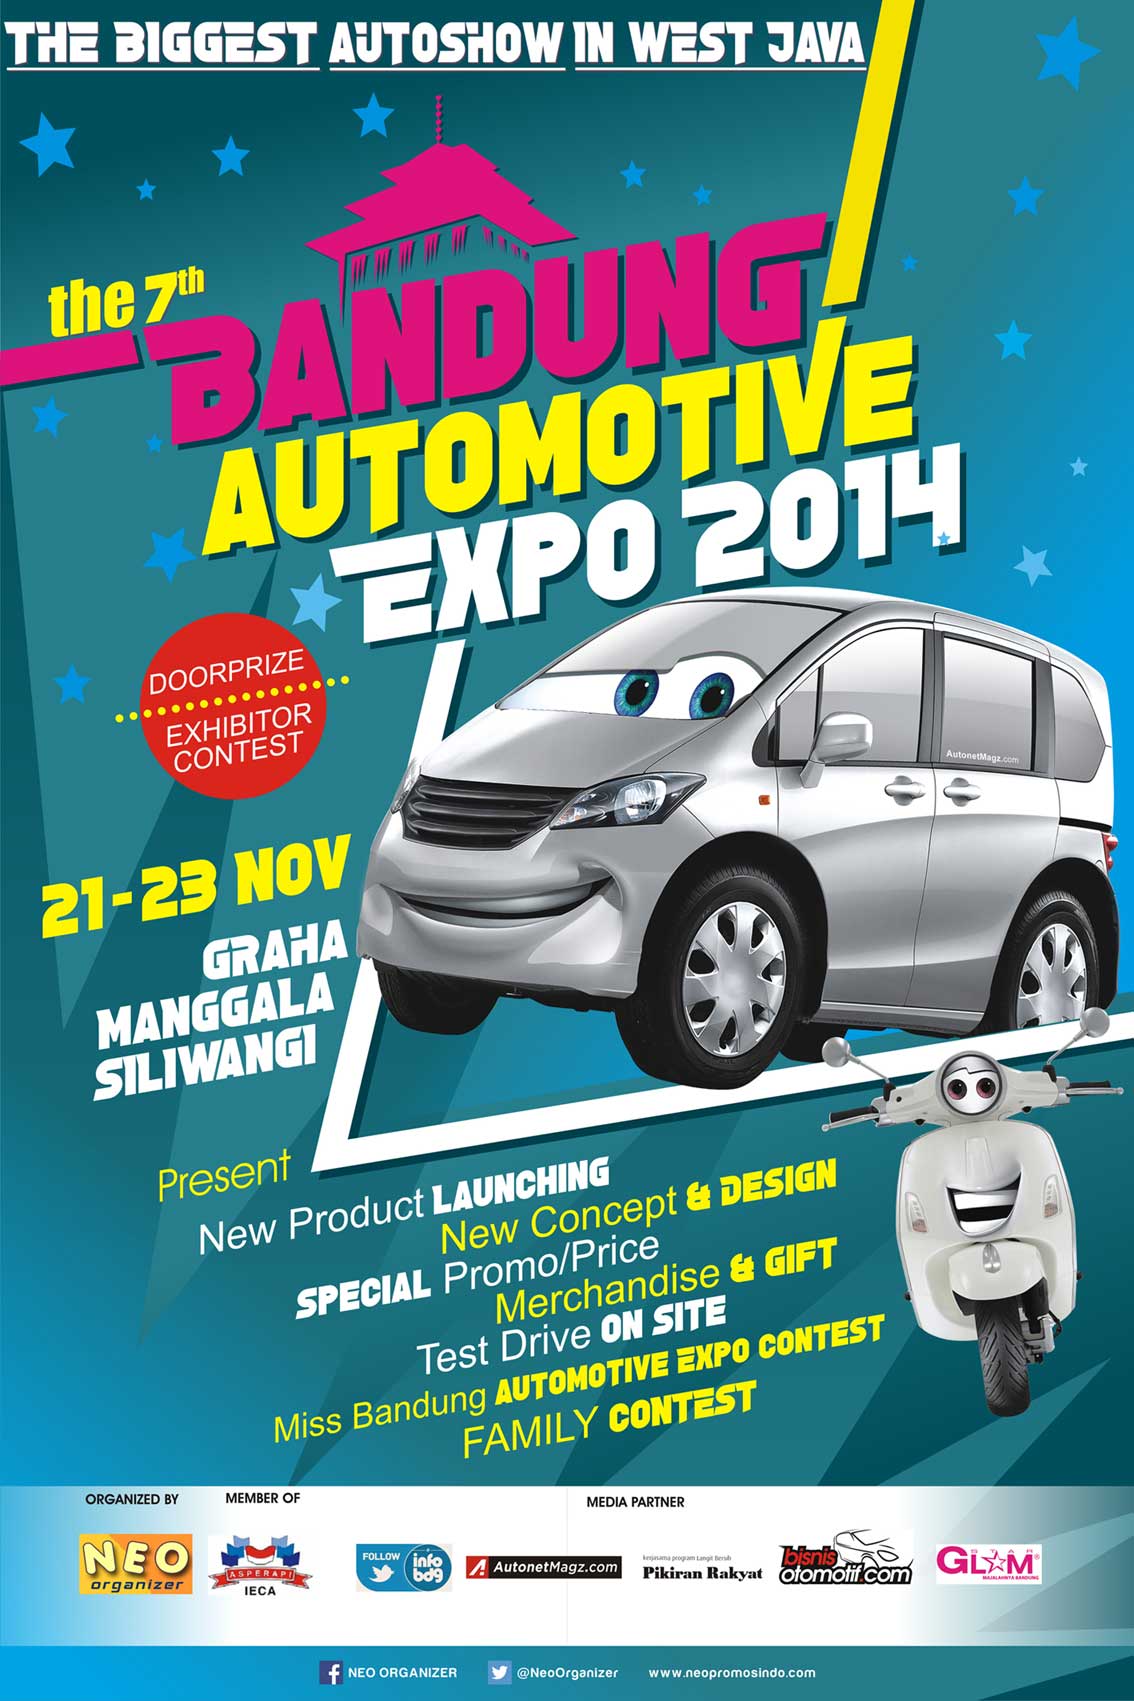 Event, Desain poster Bandung Automotive Expo 2014 Indonesia pameran otomotif Bandung: Bandung Automotive Expo 2014 Banyak Promo Menarik!